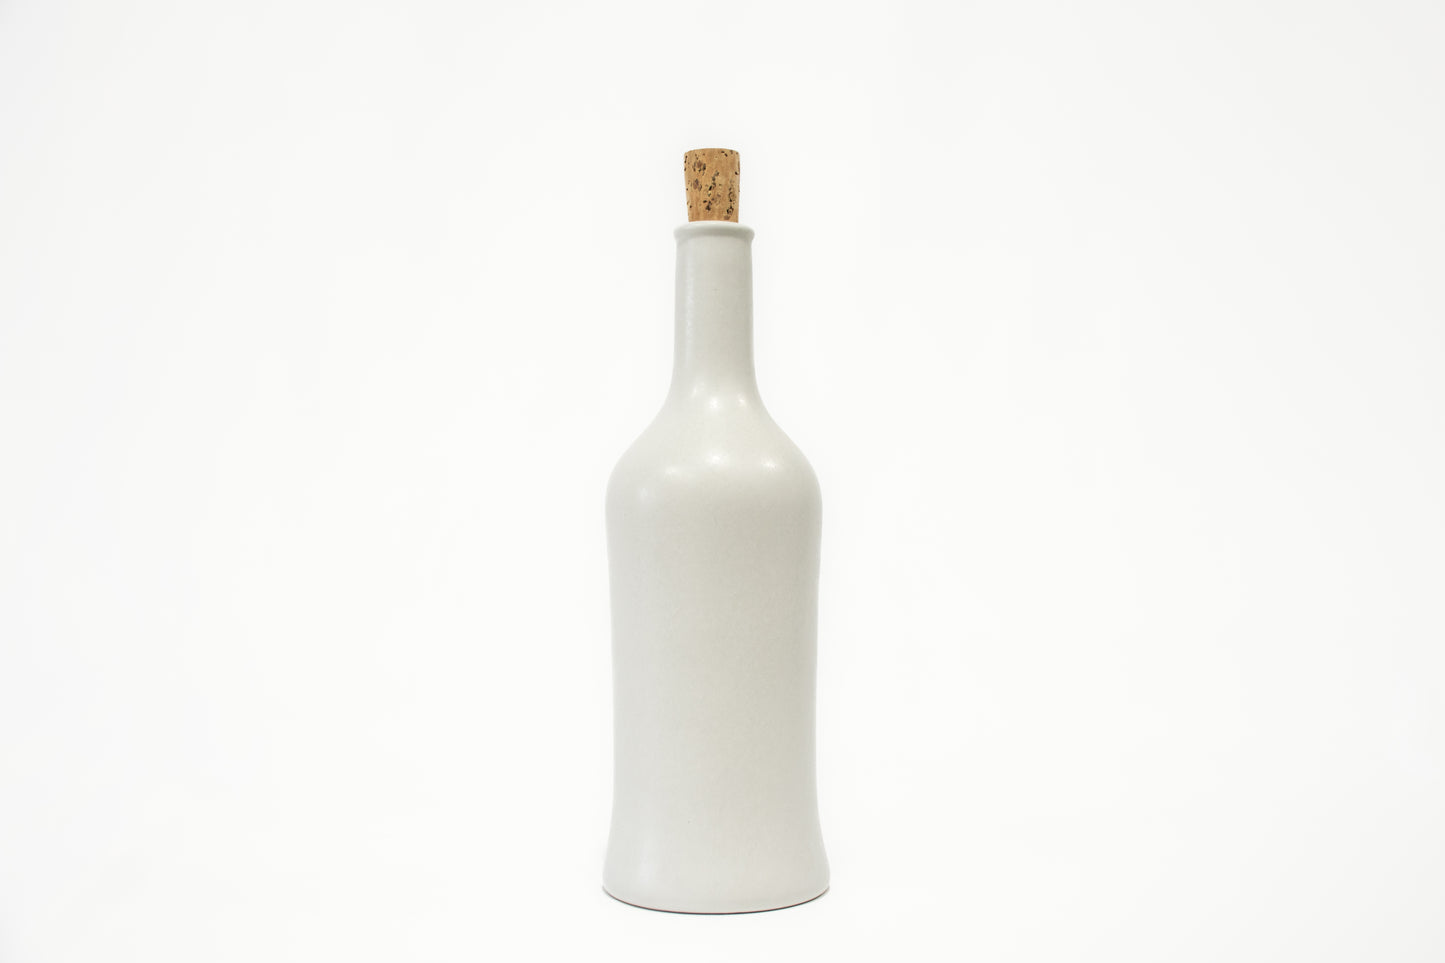 stoneware olive oil bottle - white